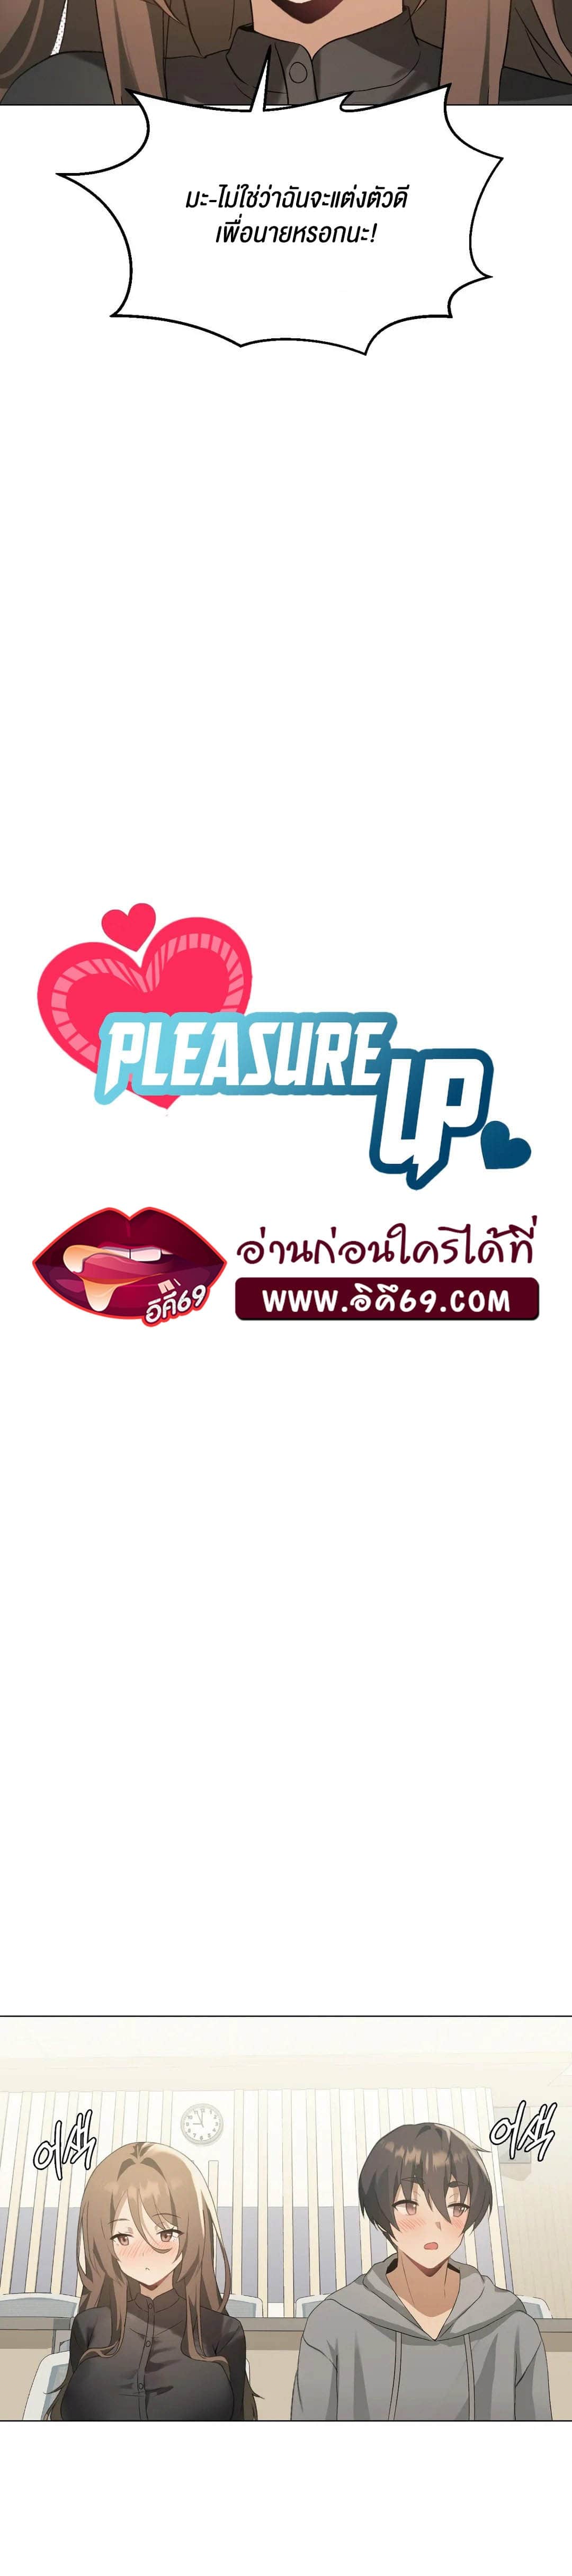 Pleasure up! 4 07